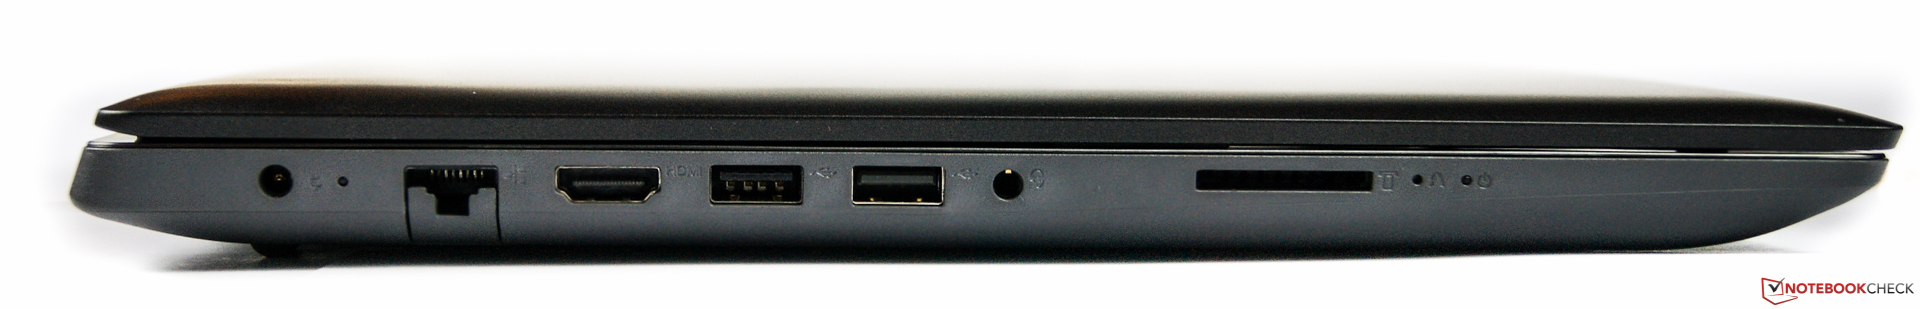 atkı bilge Emlak  Lenovo IdeaPad 320 (128-GB SSD, FHD) Review - NotebookCheck.net Reviews